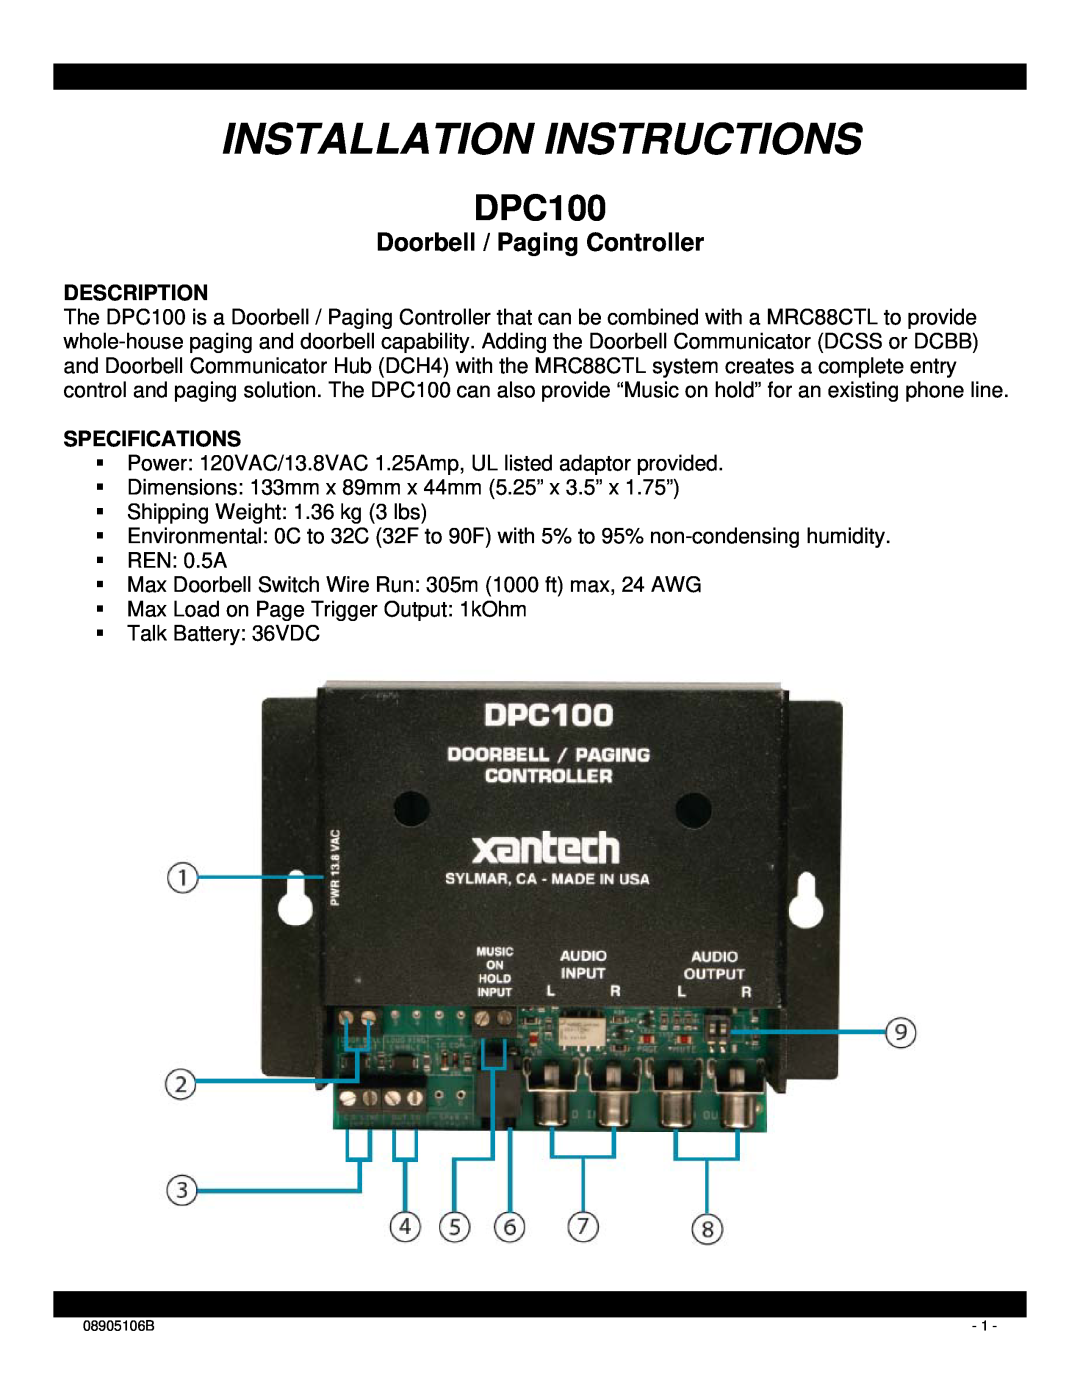 Xantech DPC100 installation instructions Description, Specifications, Installation Instructions 